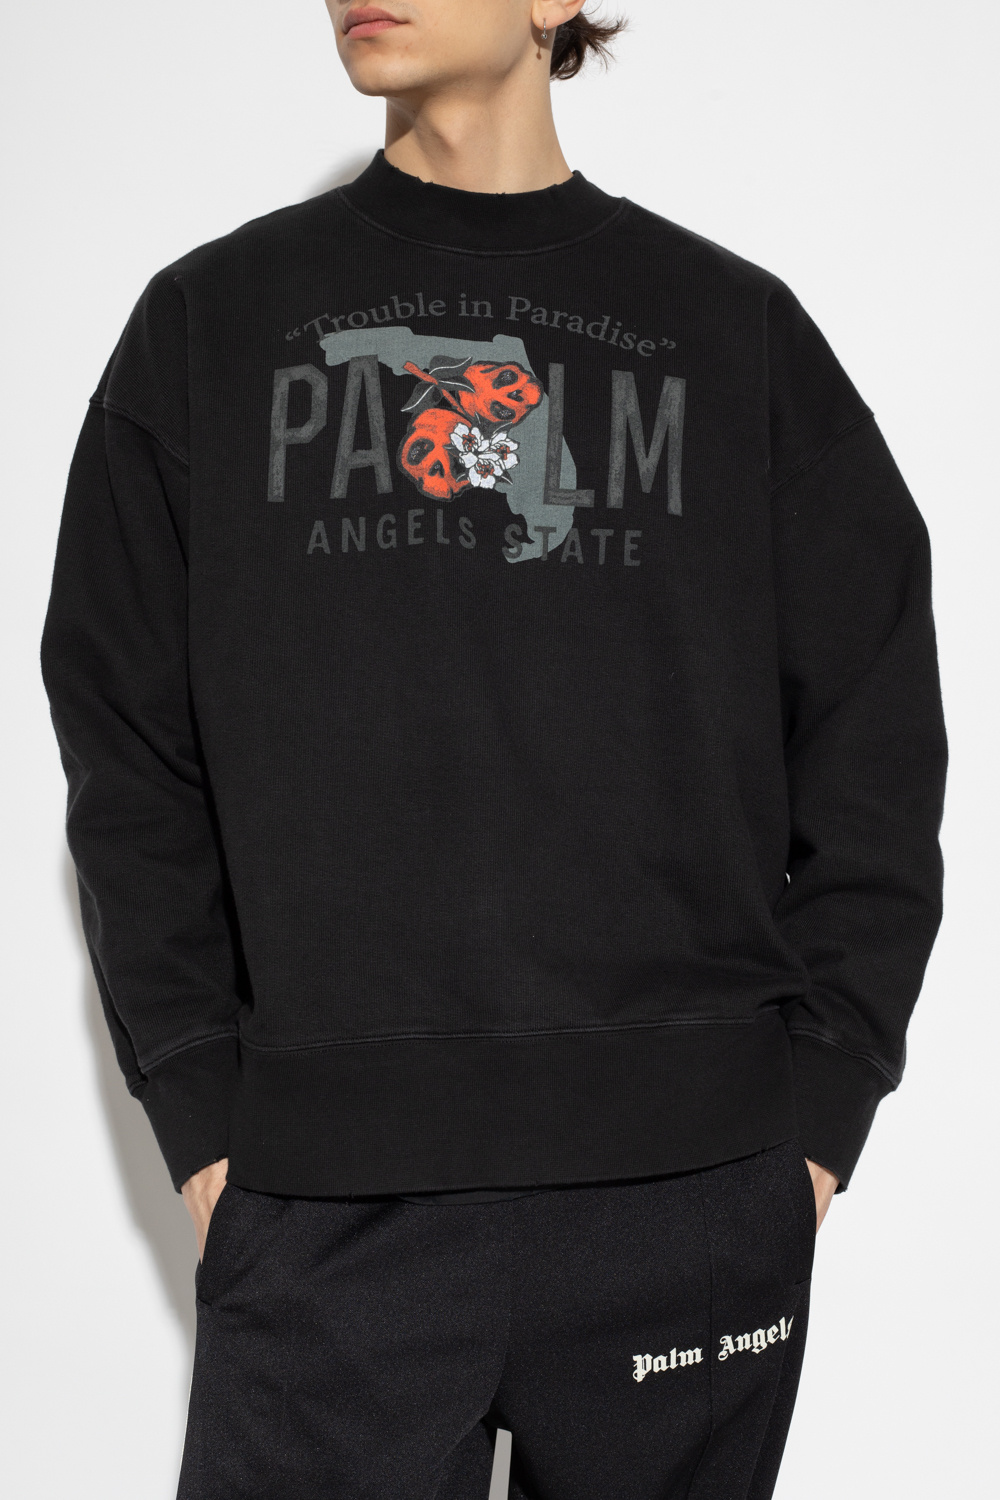 Palm Angels Printed Shirt sweatshirt